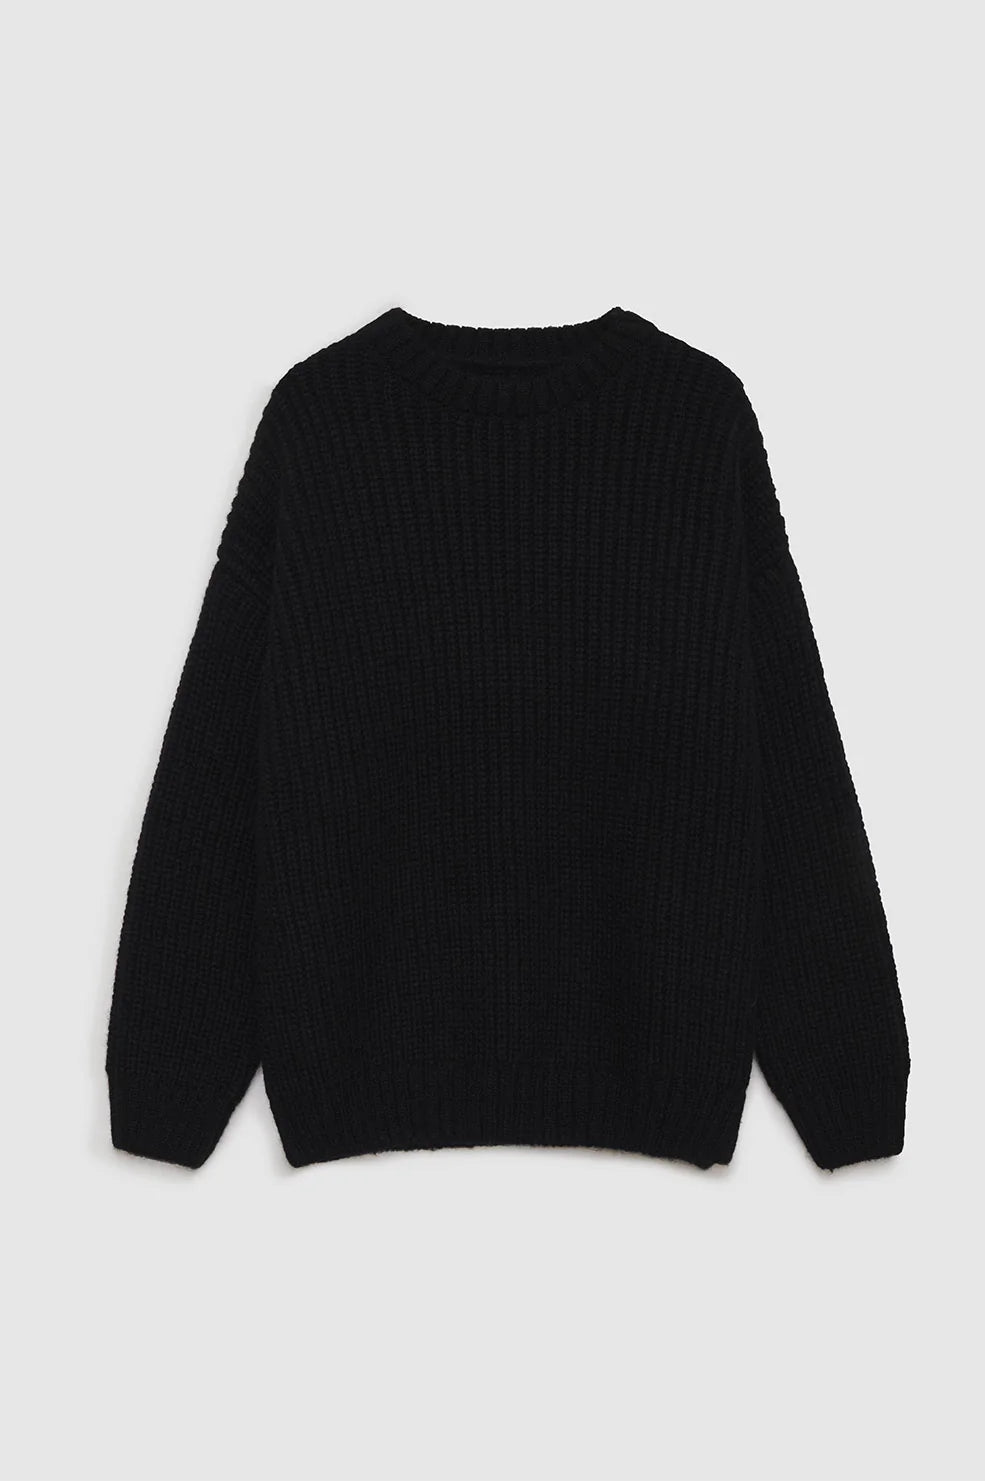 Sydney Crew Sweater in Black